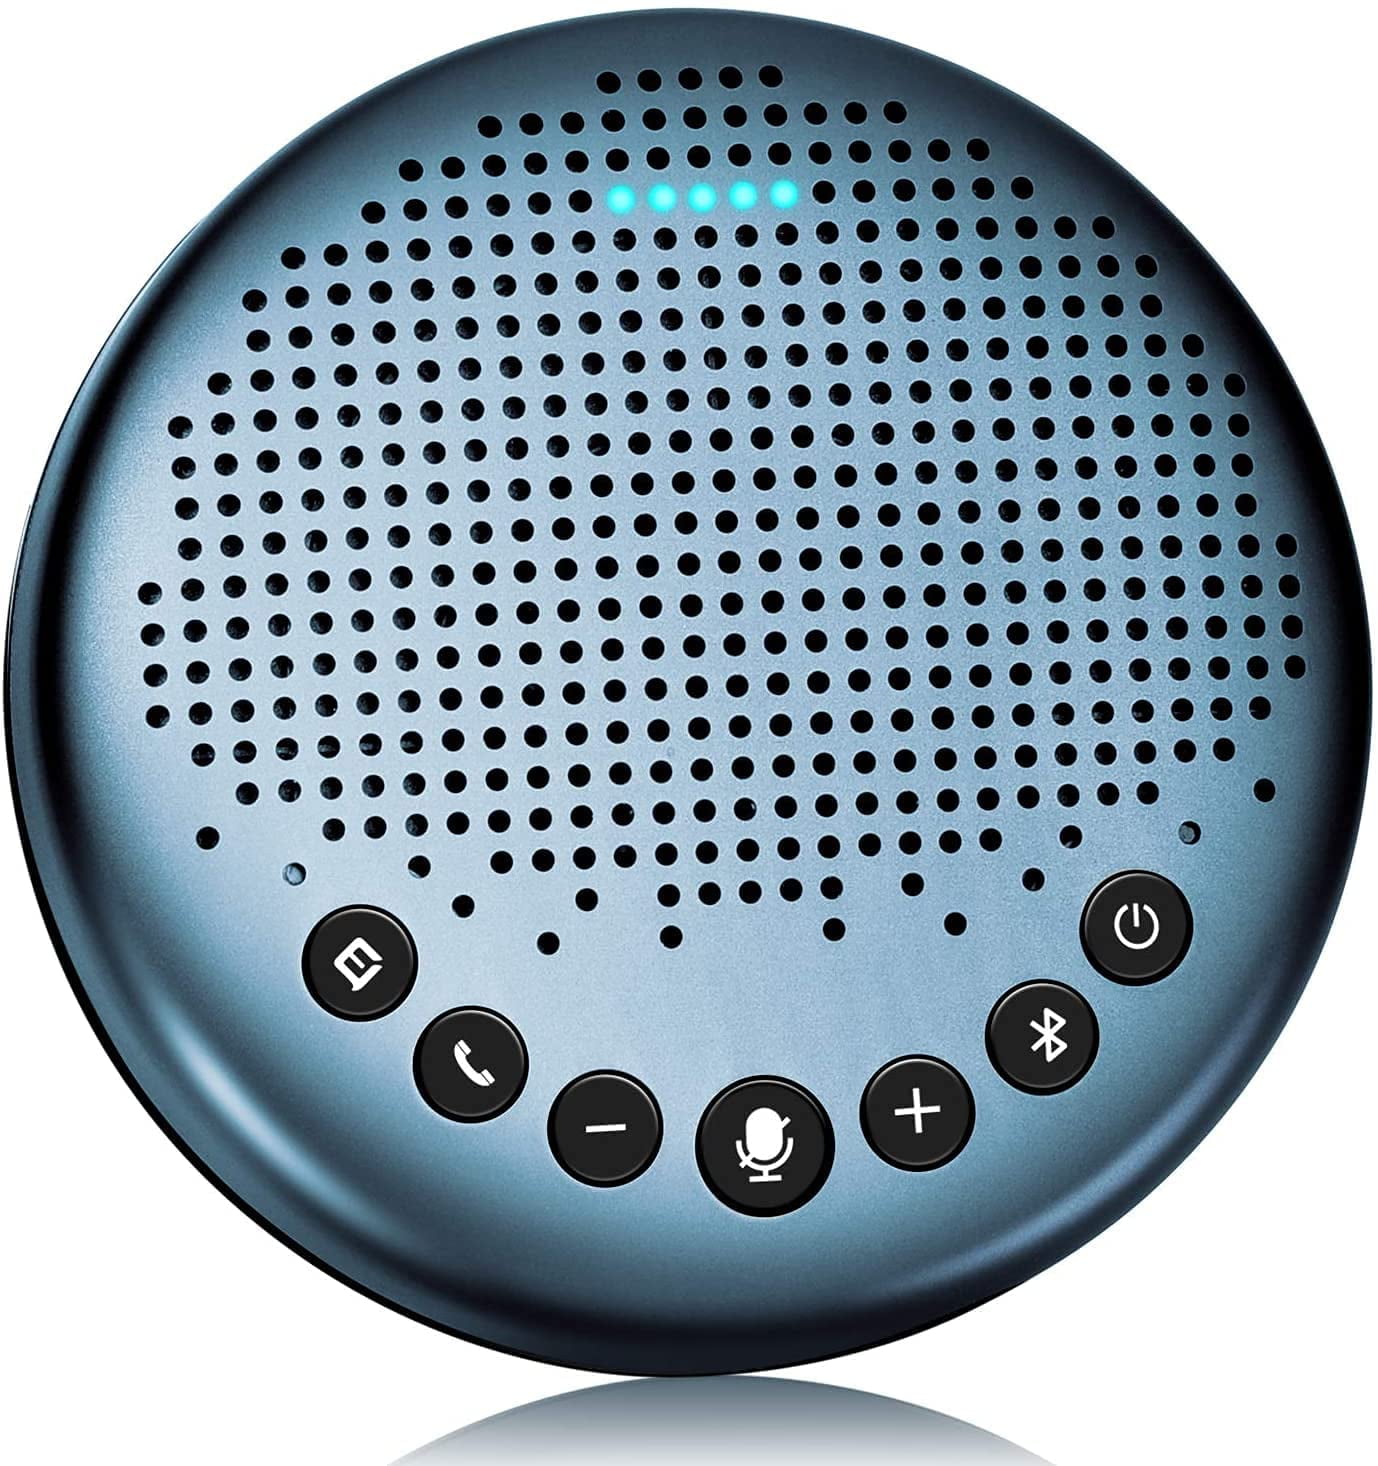 Portable Bluetooth Conference Speaker EMEET Luna Lite USB Speakerphone  VoiceIA Noise Cancelling Blue